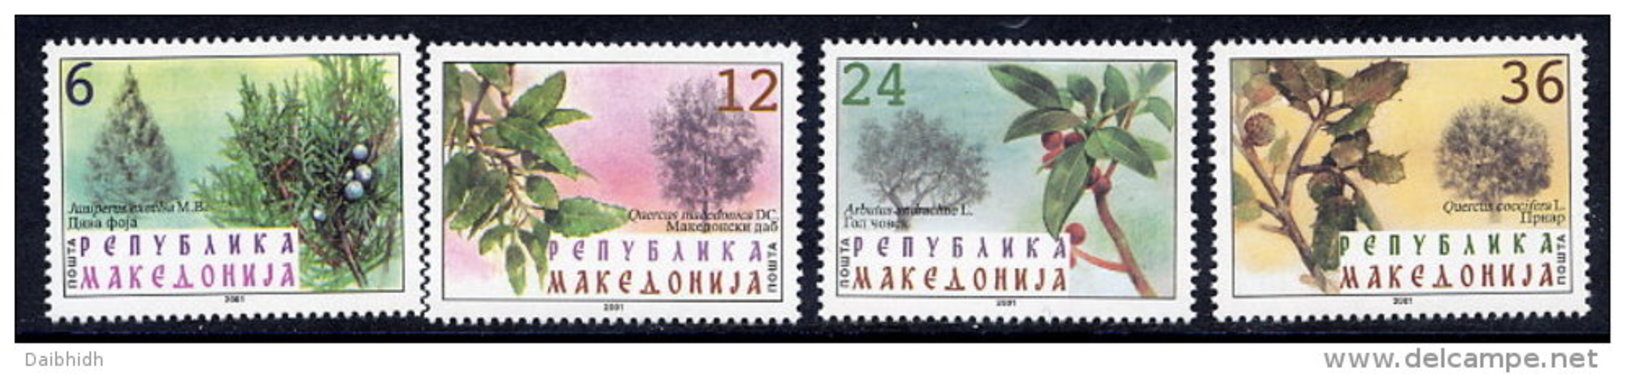 MACEDONIA  2001 Native Trees MNH / **.  Michel 234-37 - Noord-Macedonië